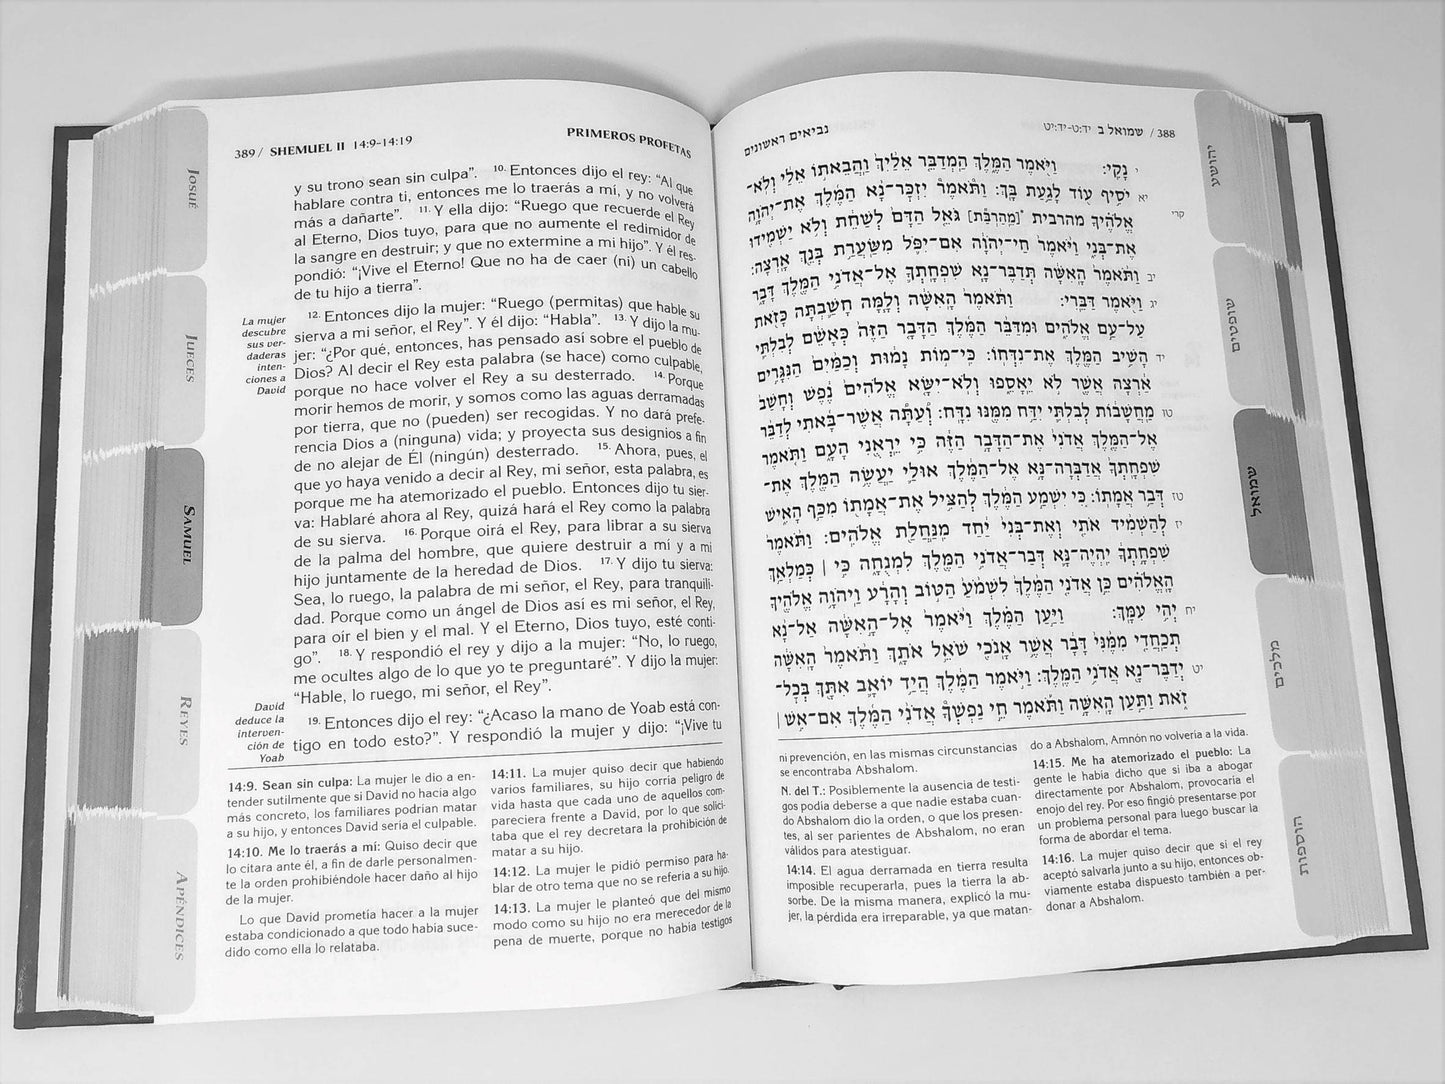 Biblia Tanaj  tomo 2,  primeros profetas ( edición Katz ) - Libreria Jerusalem Centro